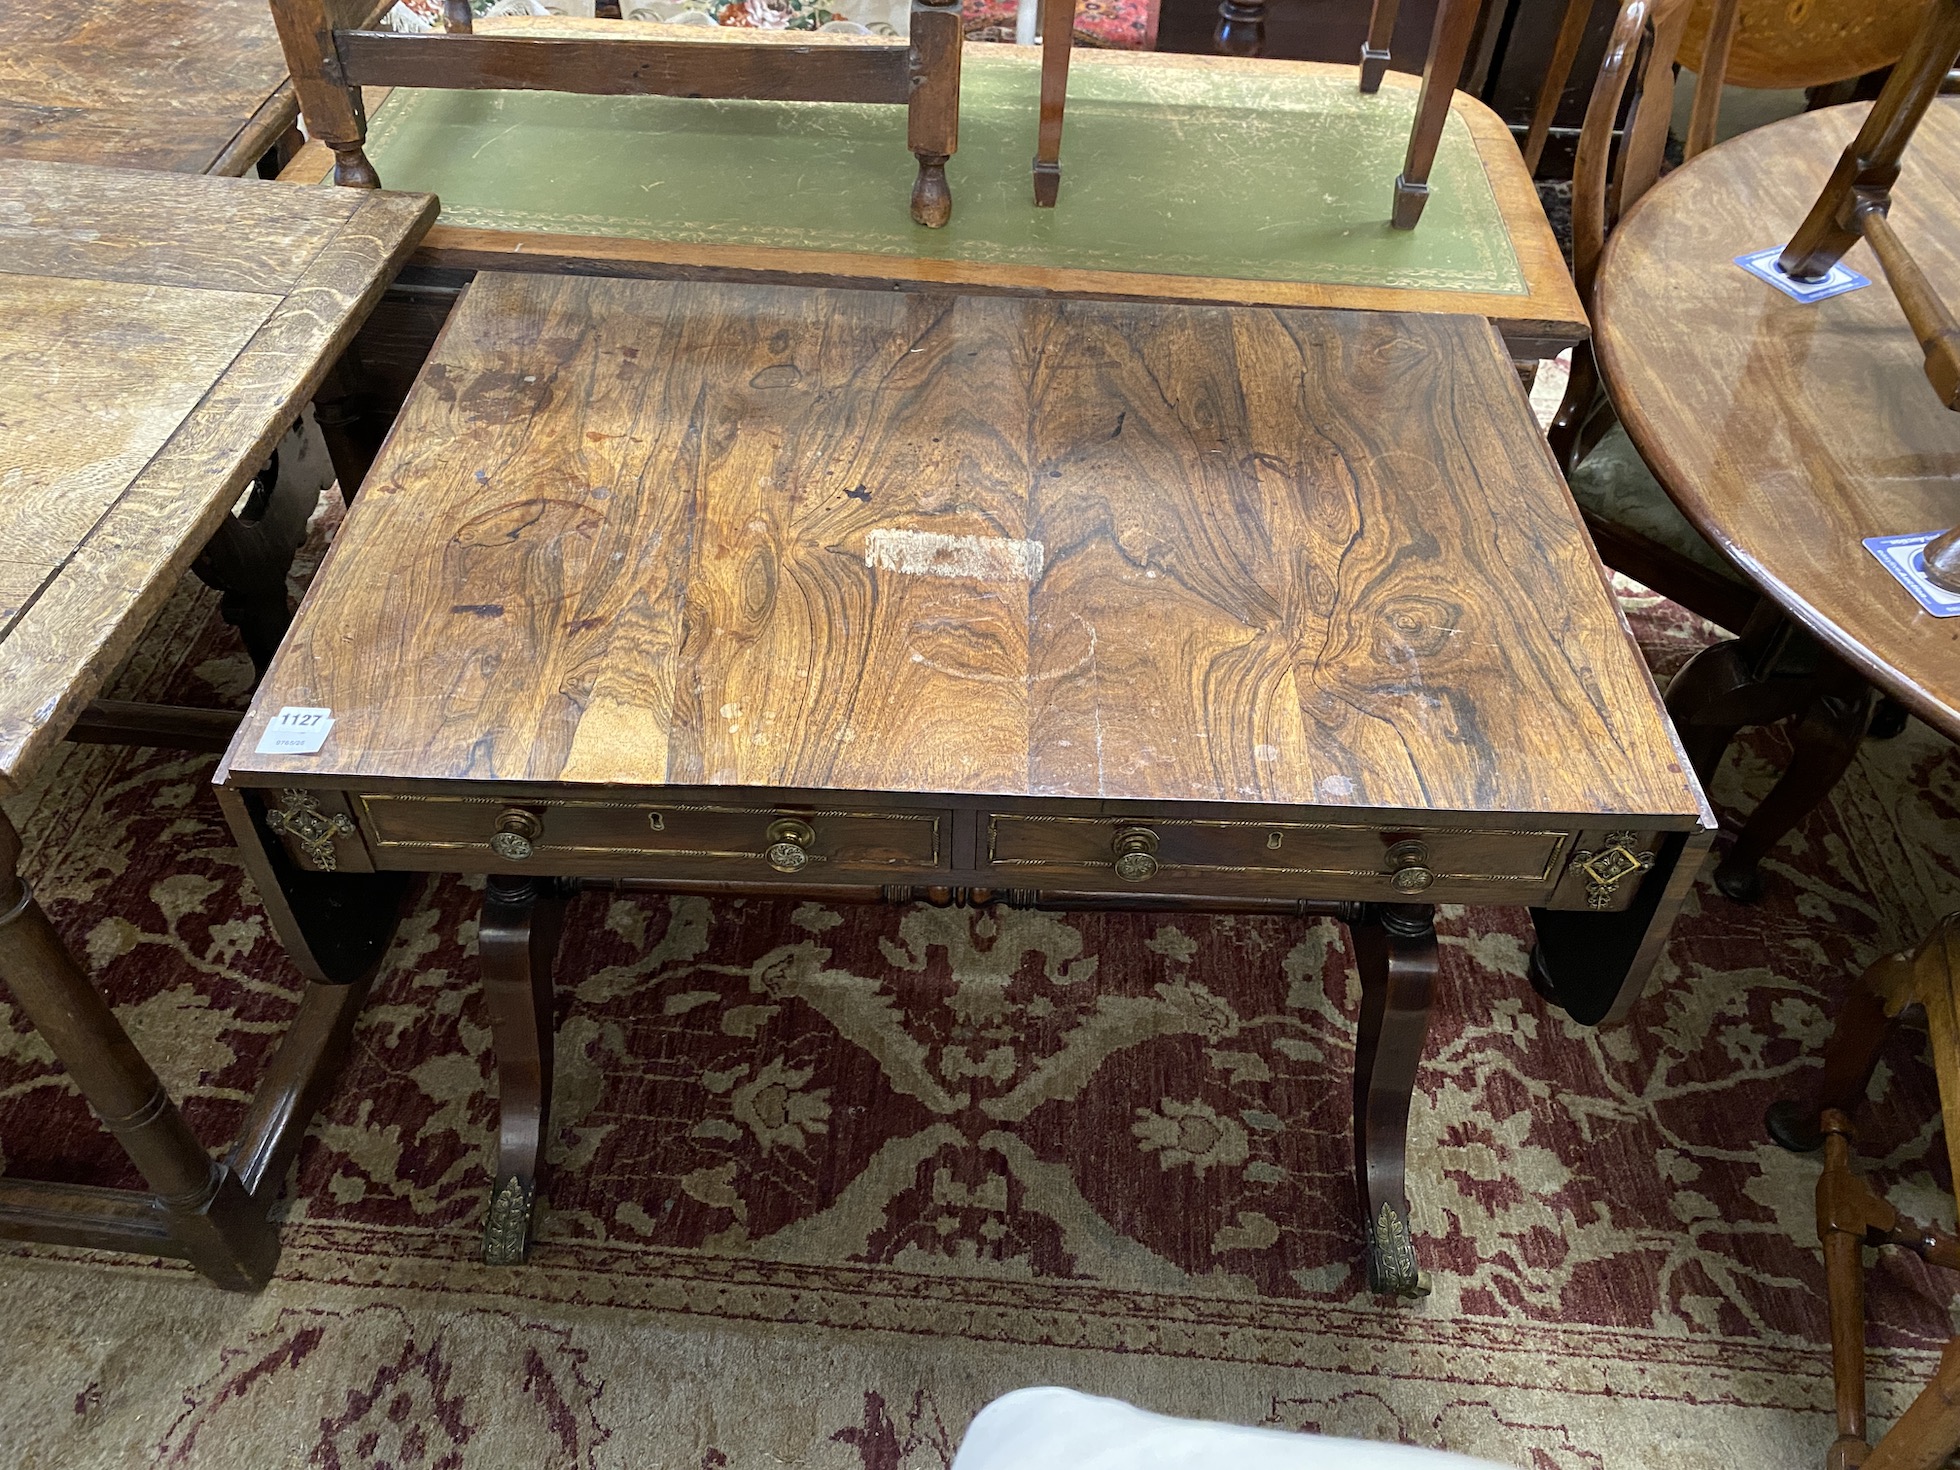 A Regency gilt metal mounted rosewood sofa table, width 95cm, depth 62cm, height 73cm